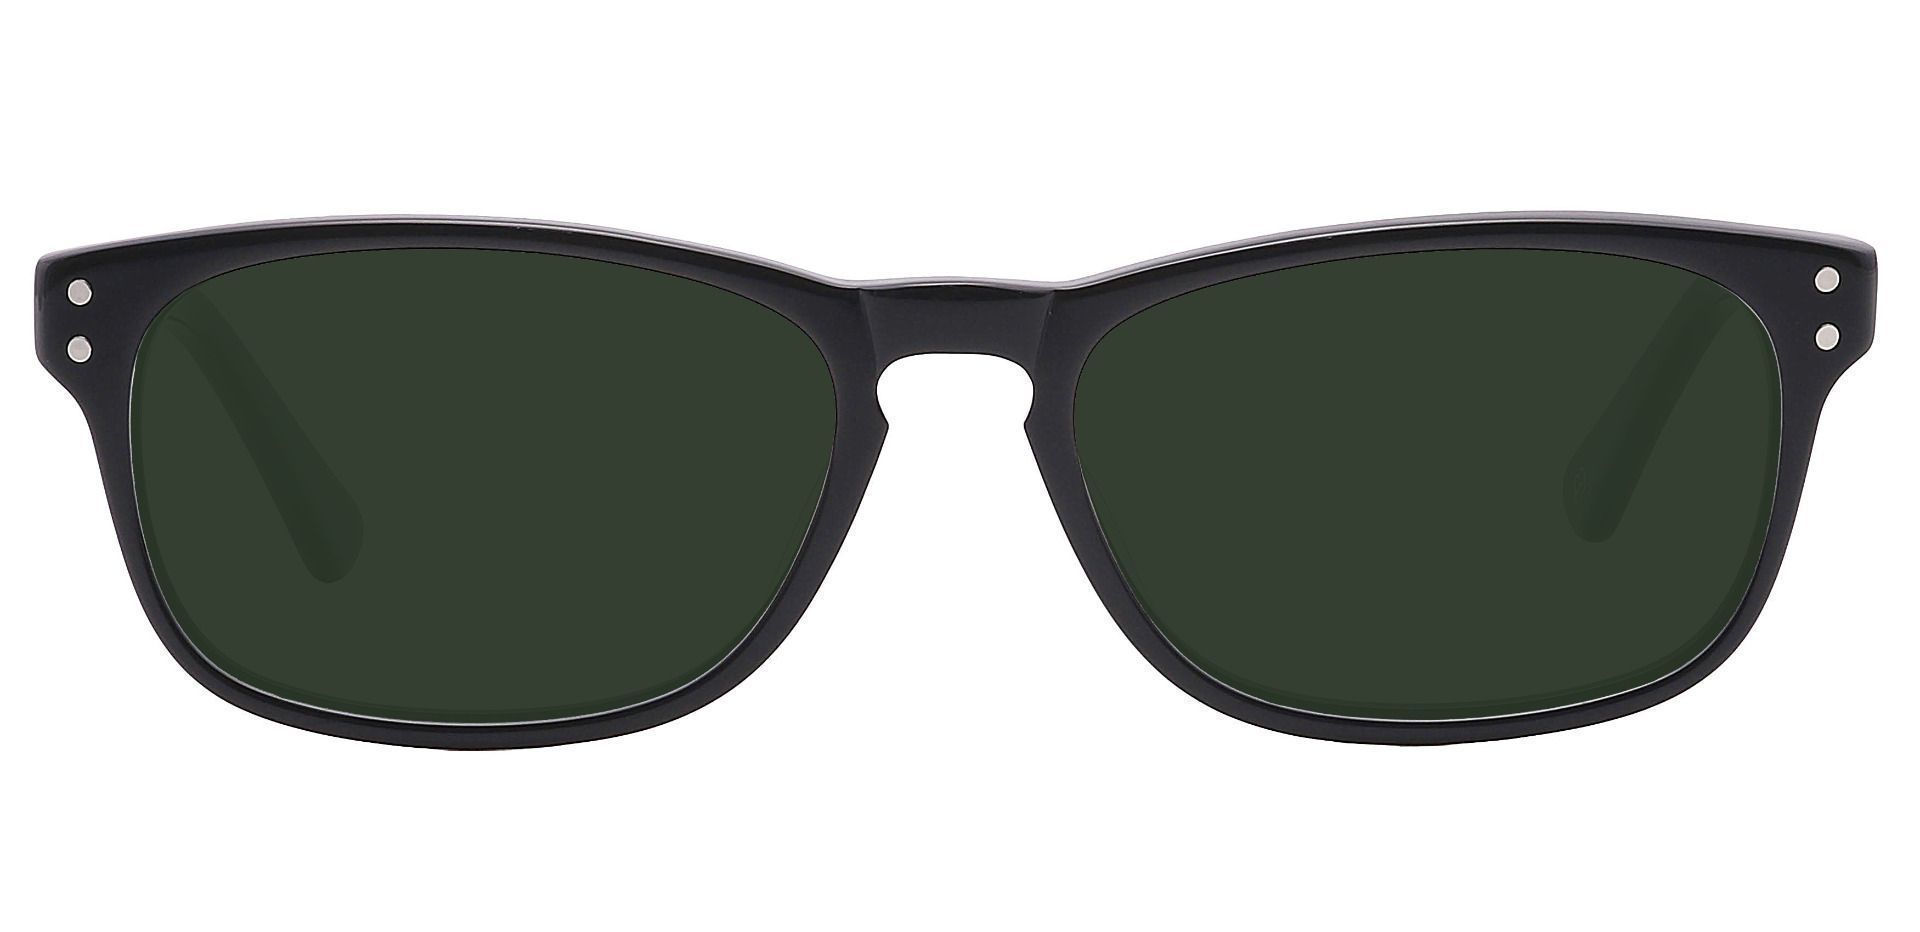 Morris Rectangle Non-Rx Sunglasses - Black Frame With Green Lenses